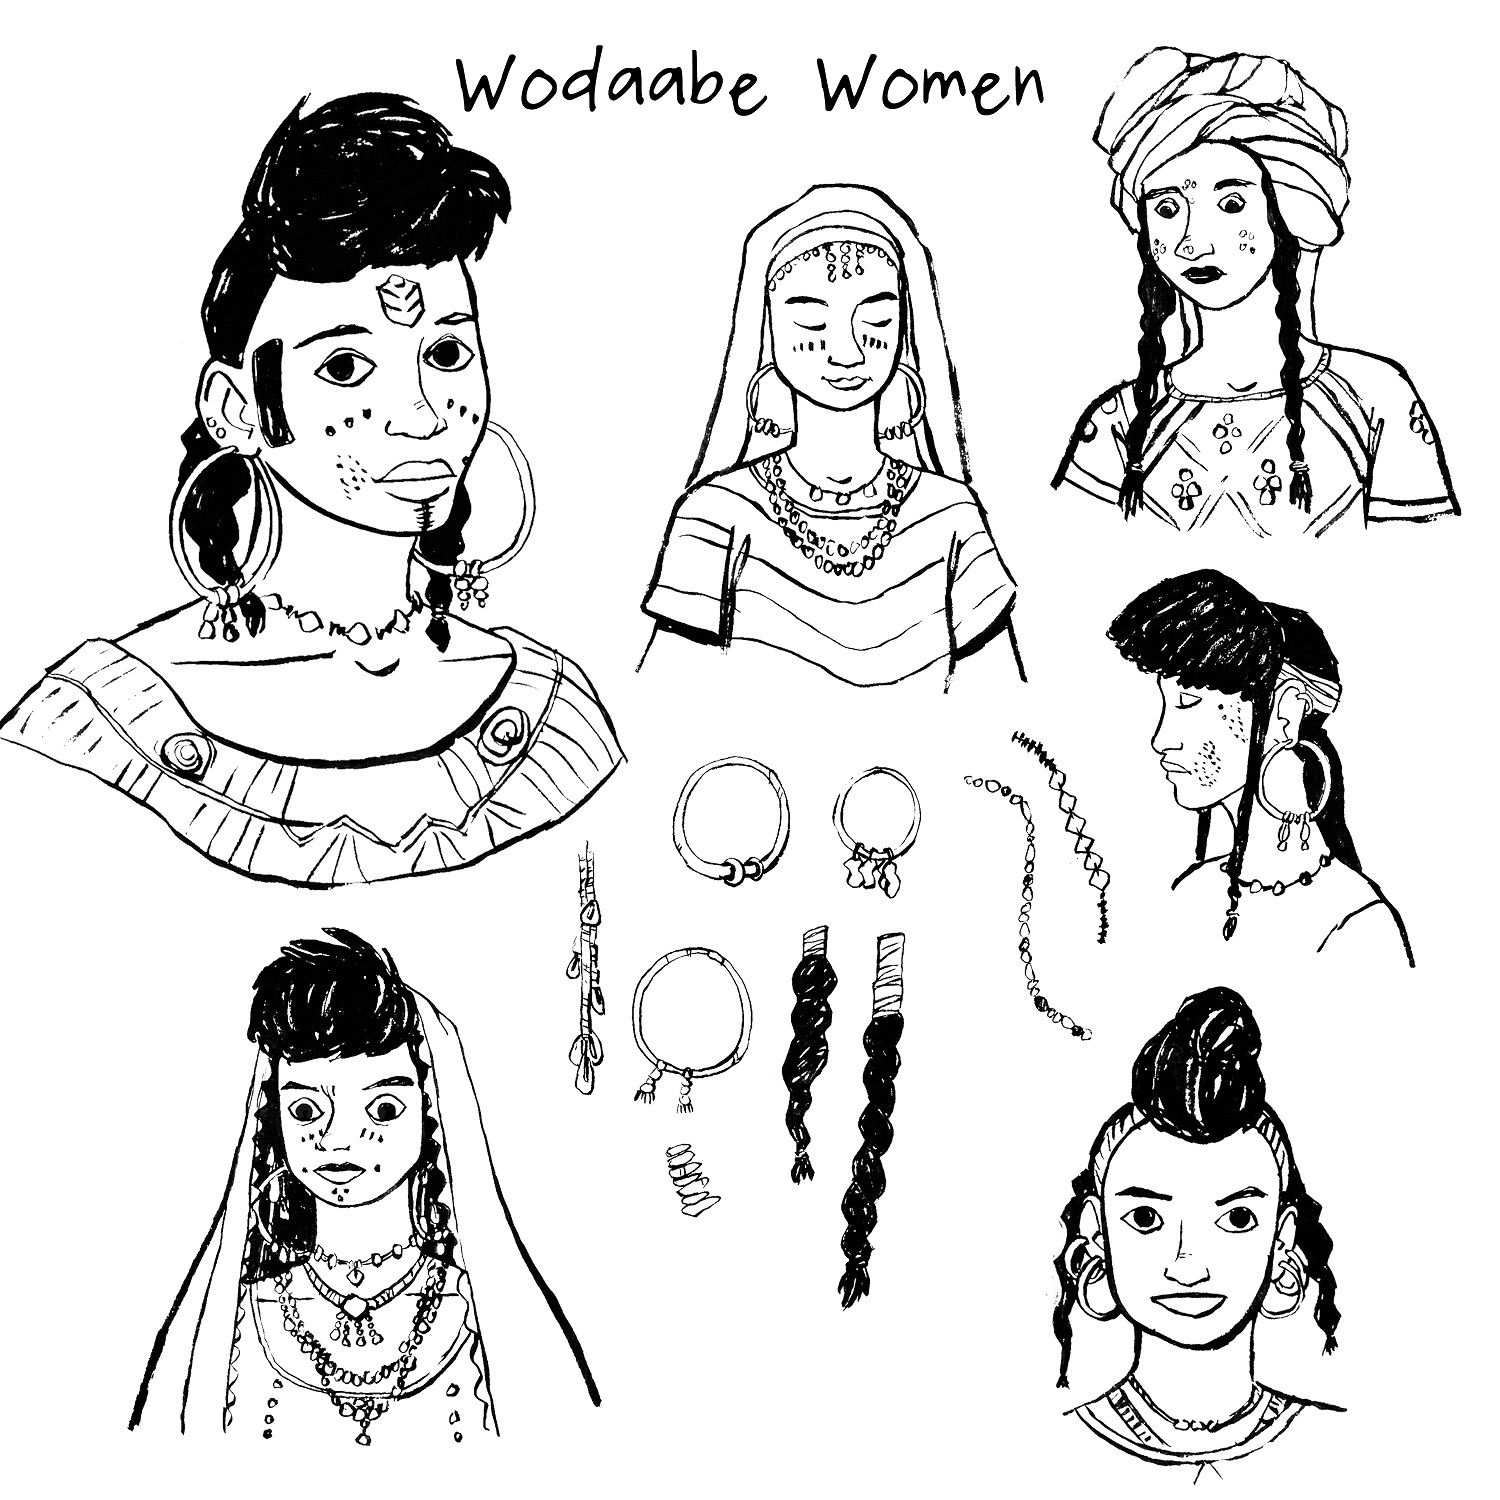 Ink Illustration of Wodaabe Women